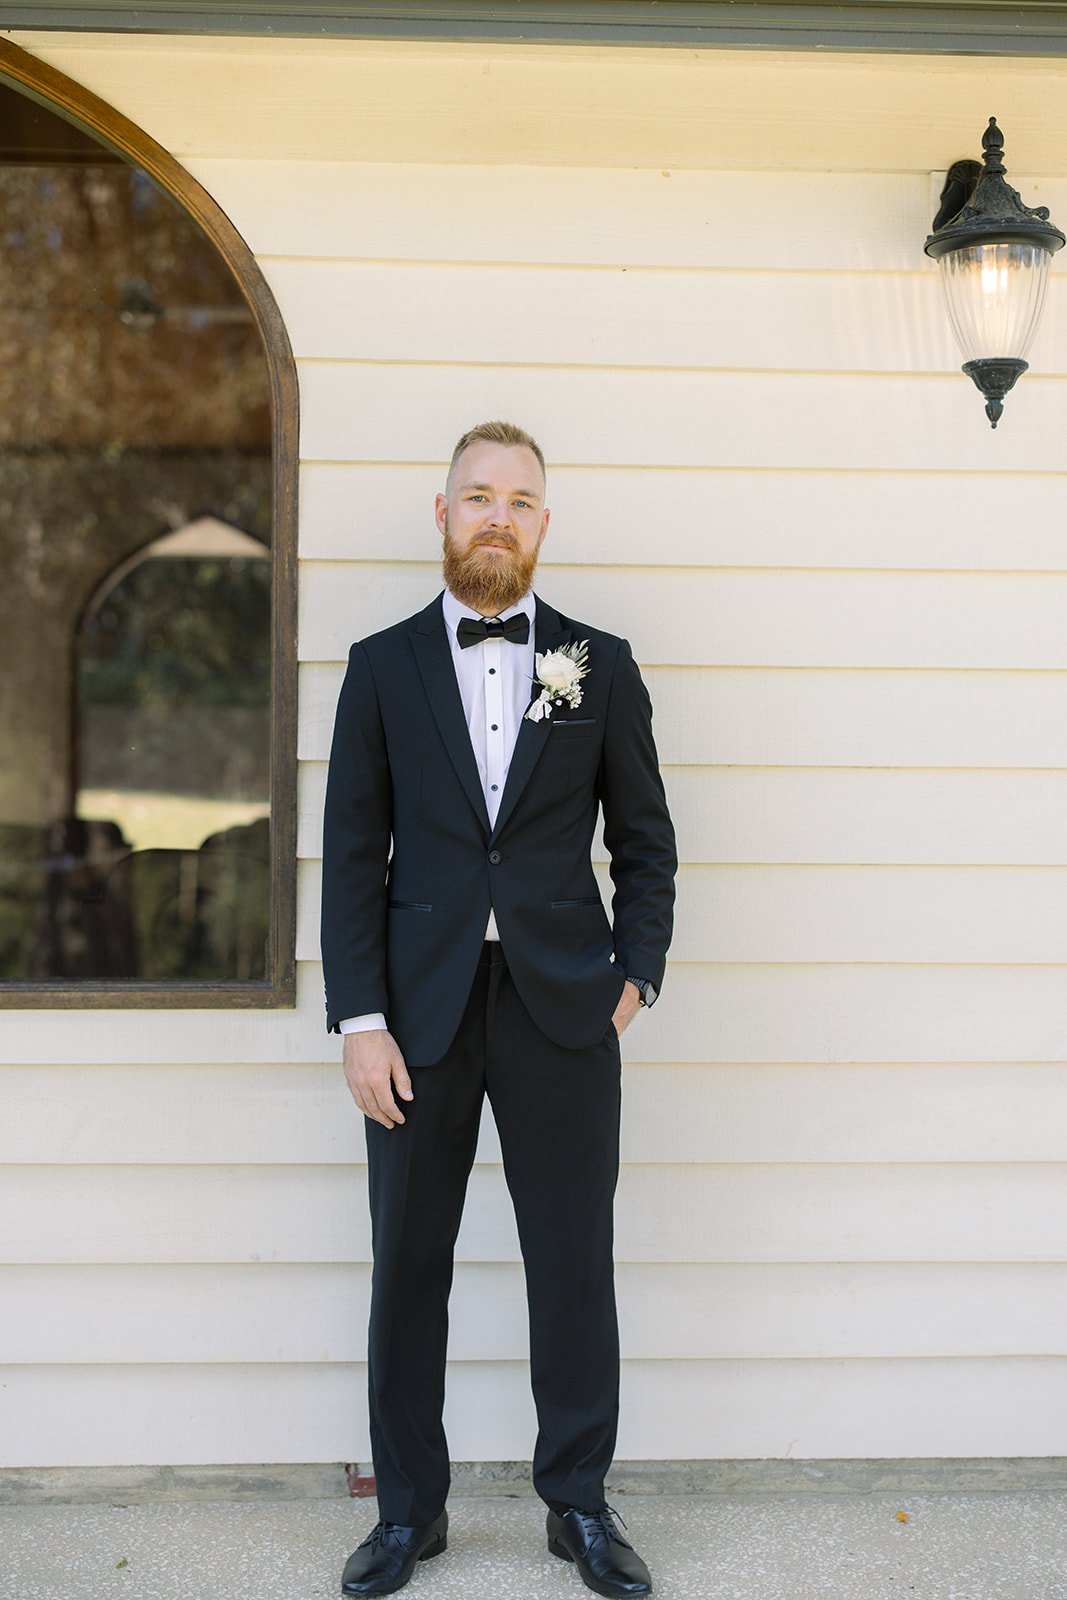 Brisbane groom in black and white suit portrait